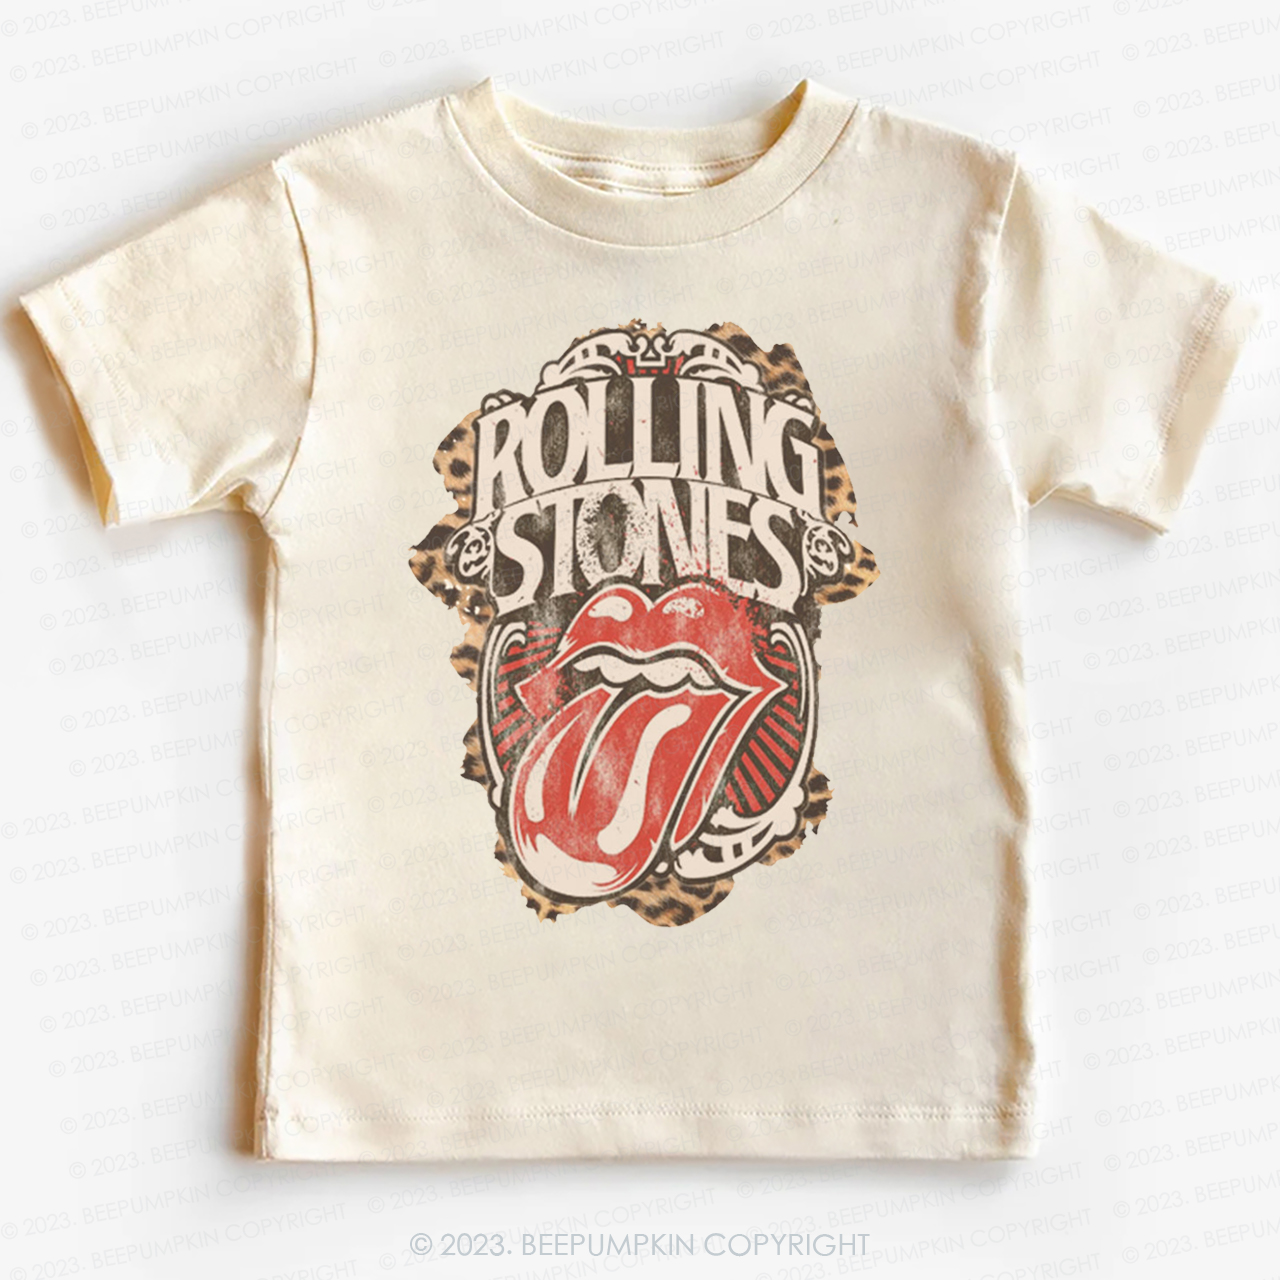  Rolling Stones Rock Band Kids Shirt